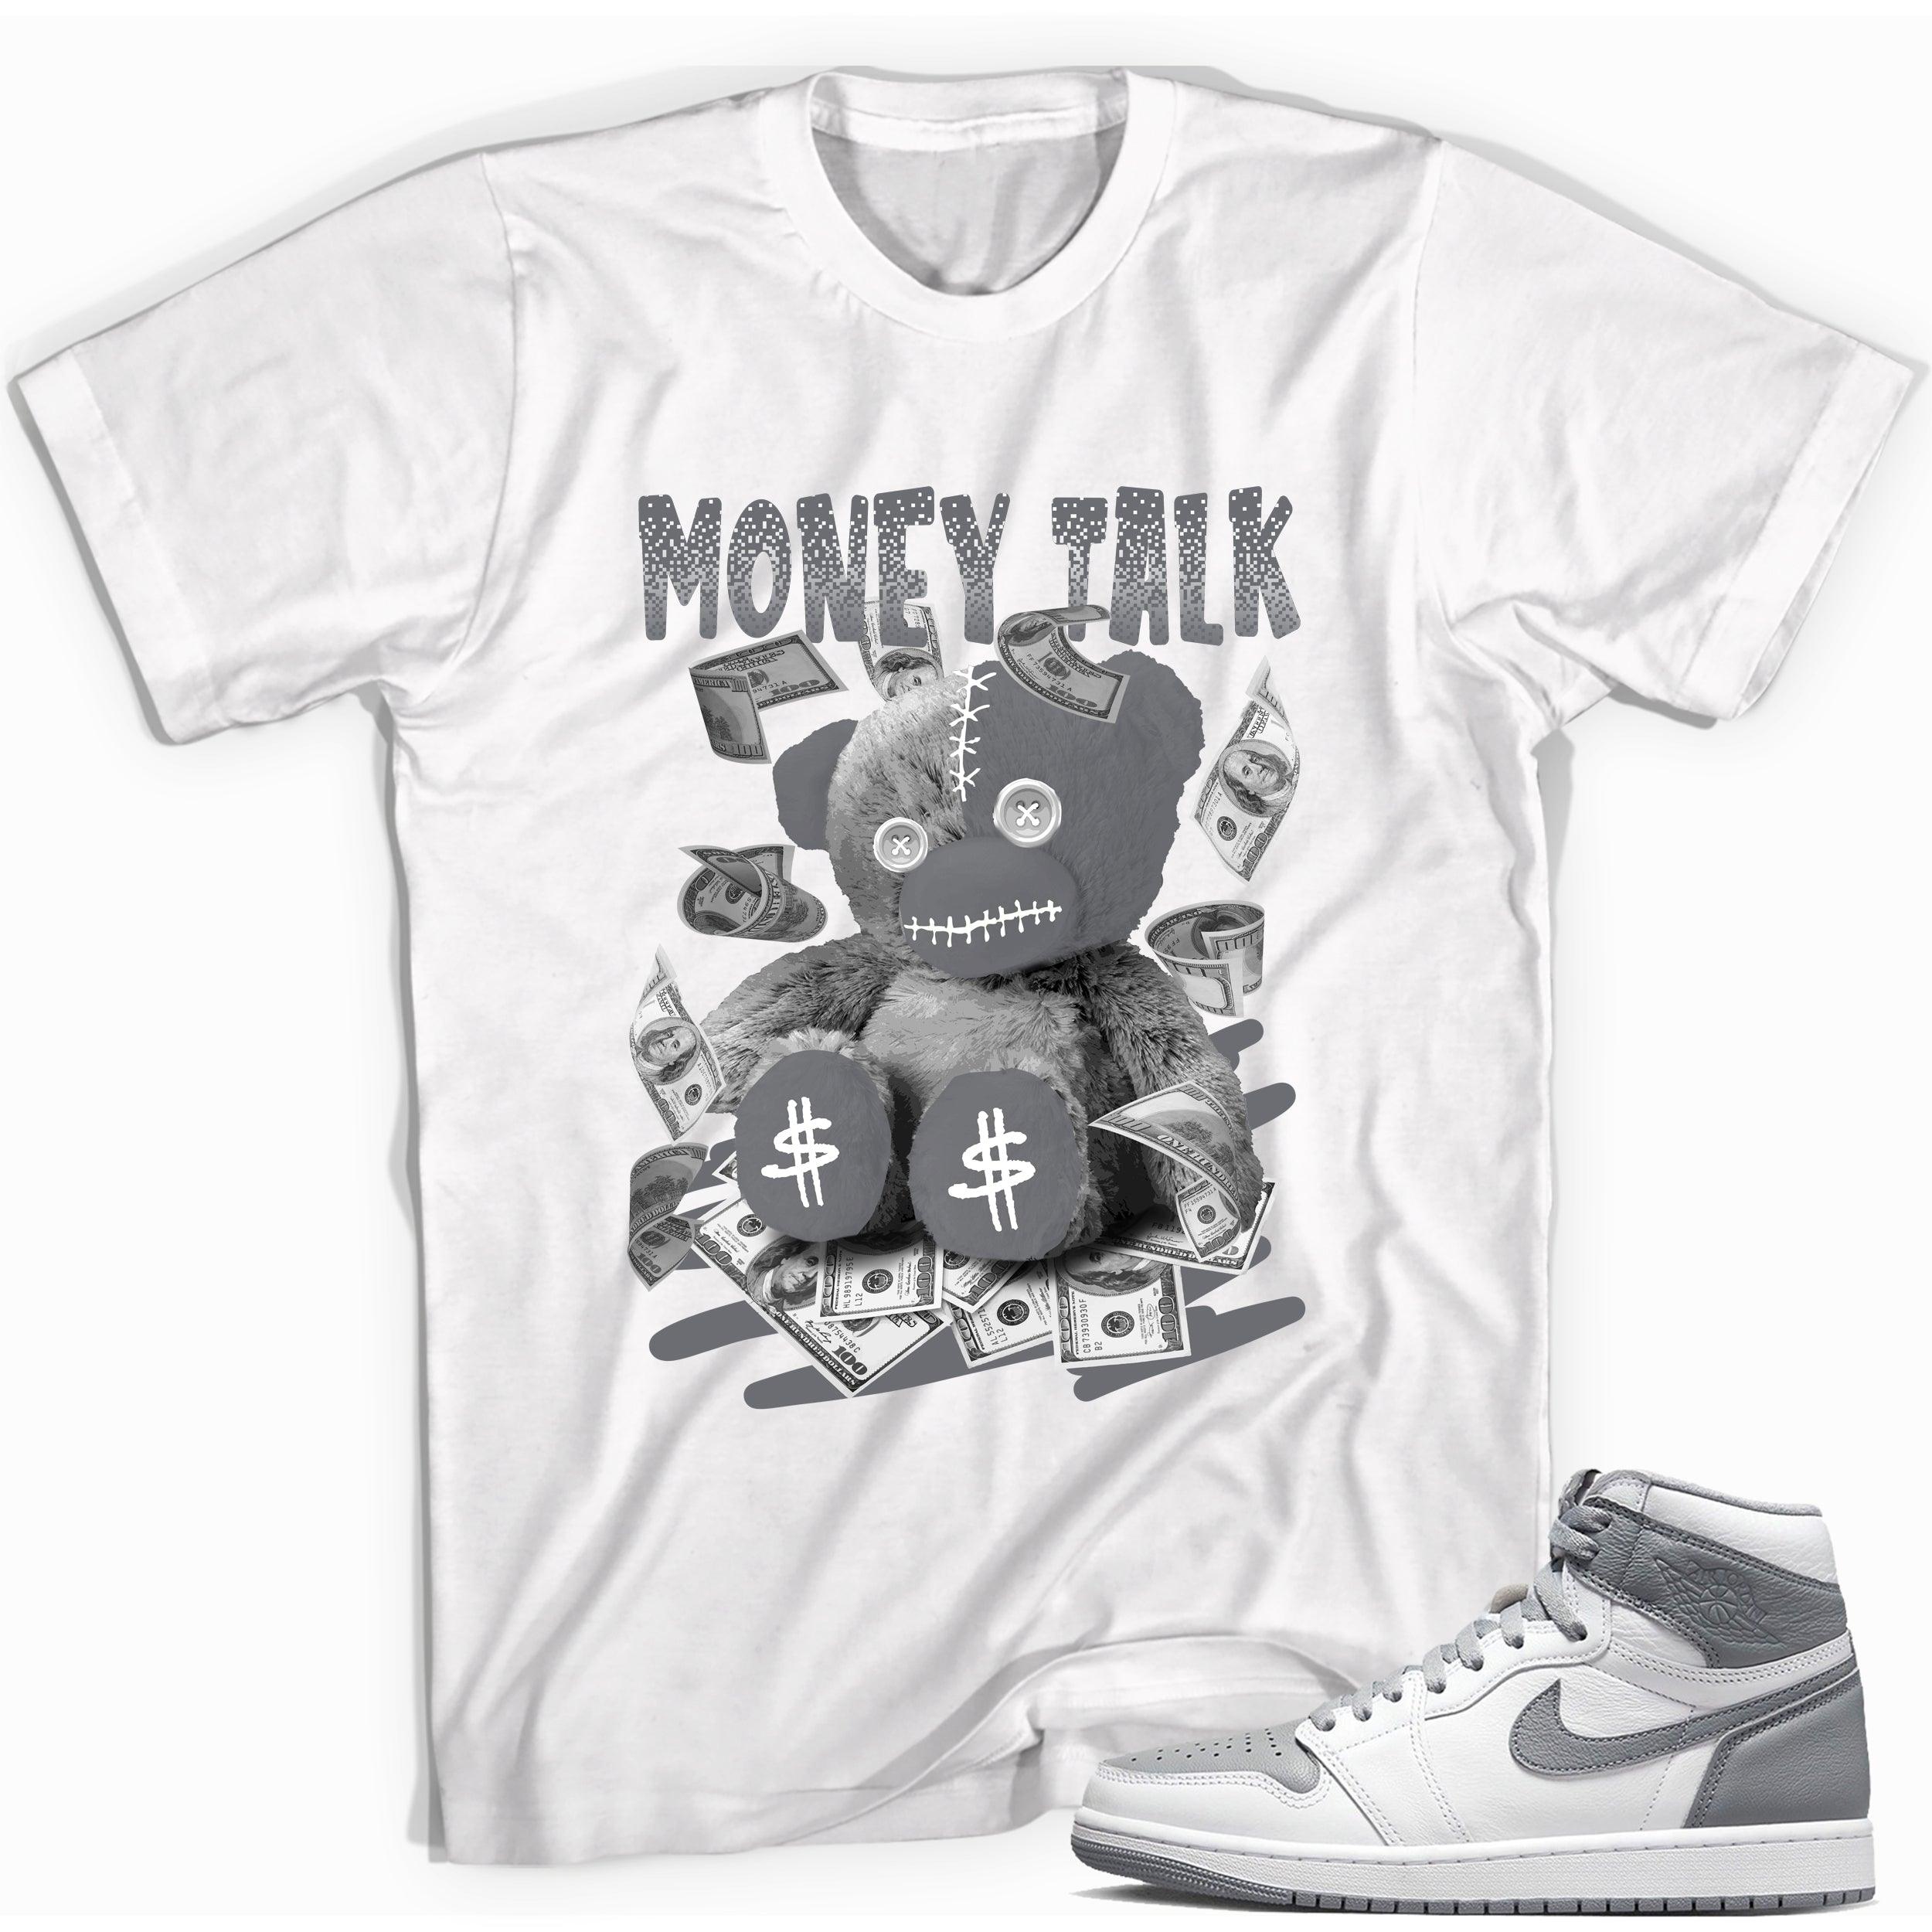 Money Talk Bear Shirt for Jordan 1s photo